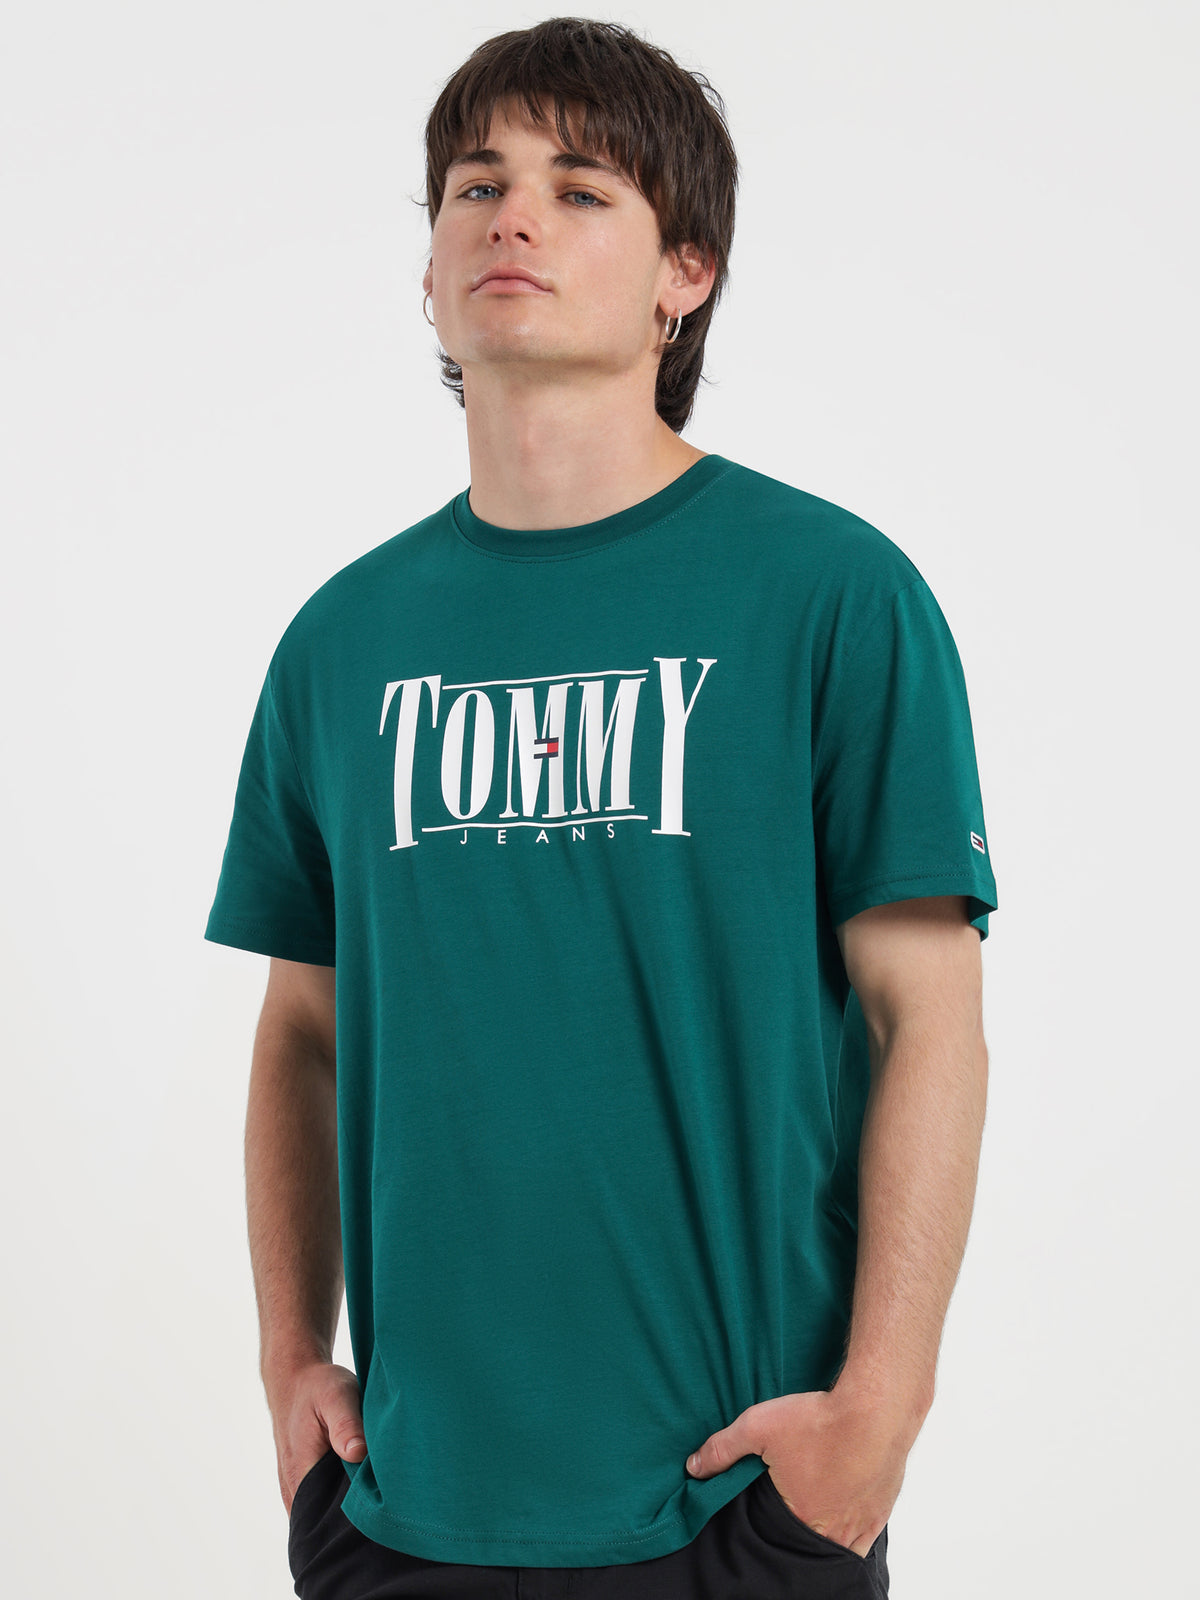 Classic Essentials T-Shirt in Dark Green